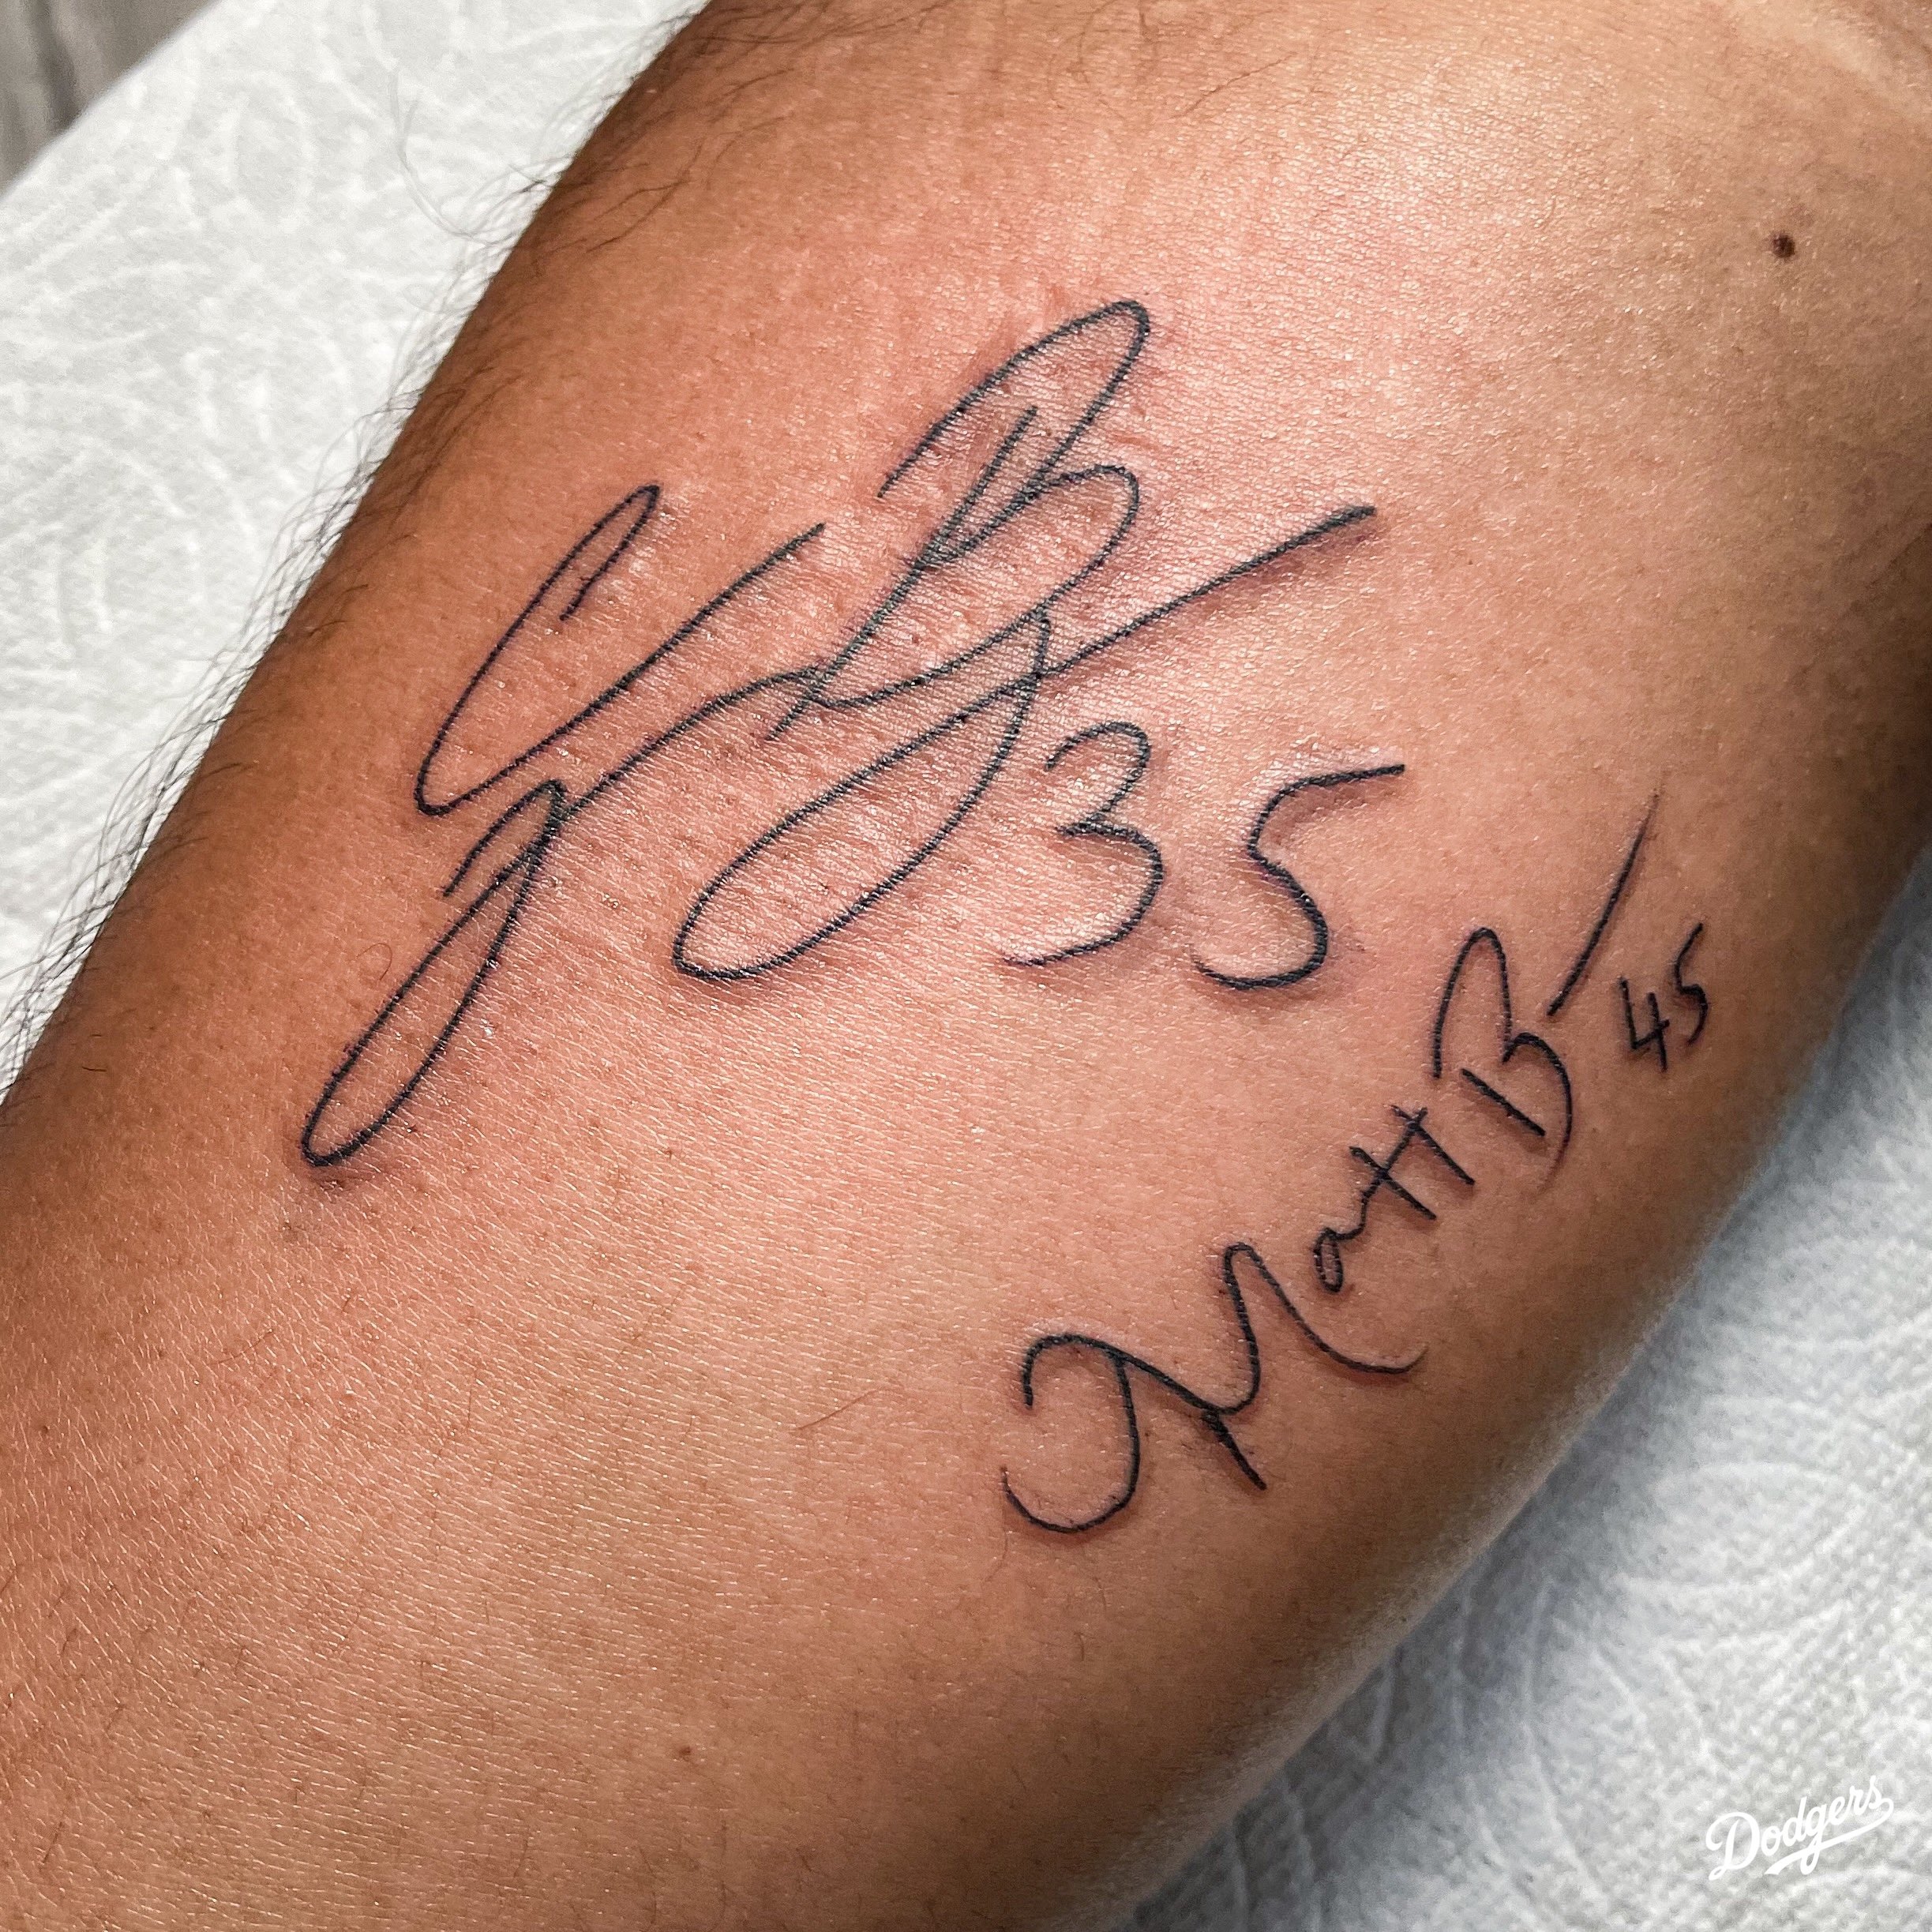 Tatuaje de un fan de los Dodgers